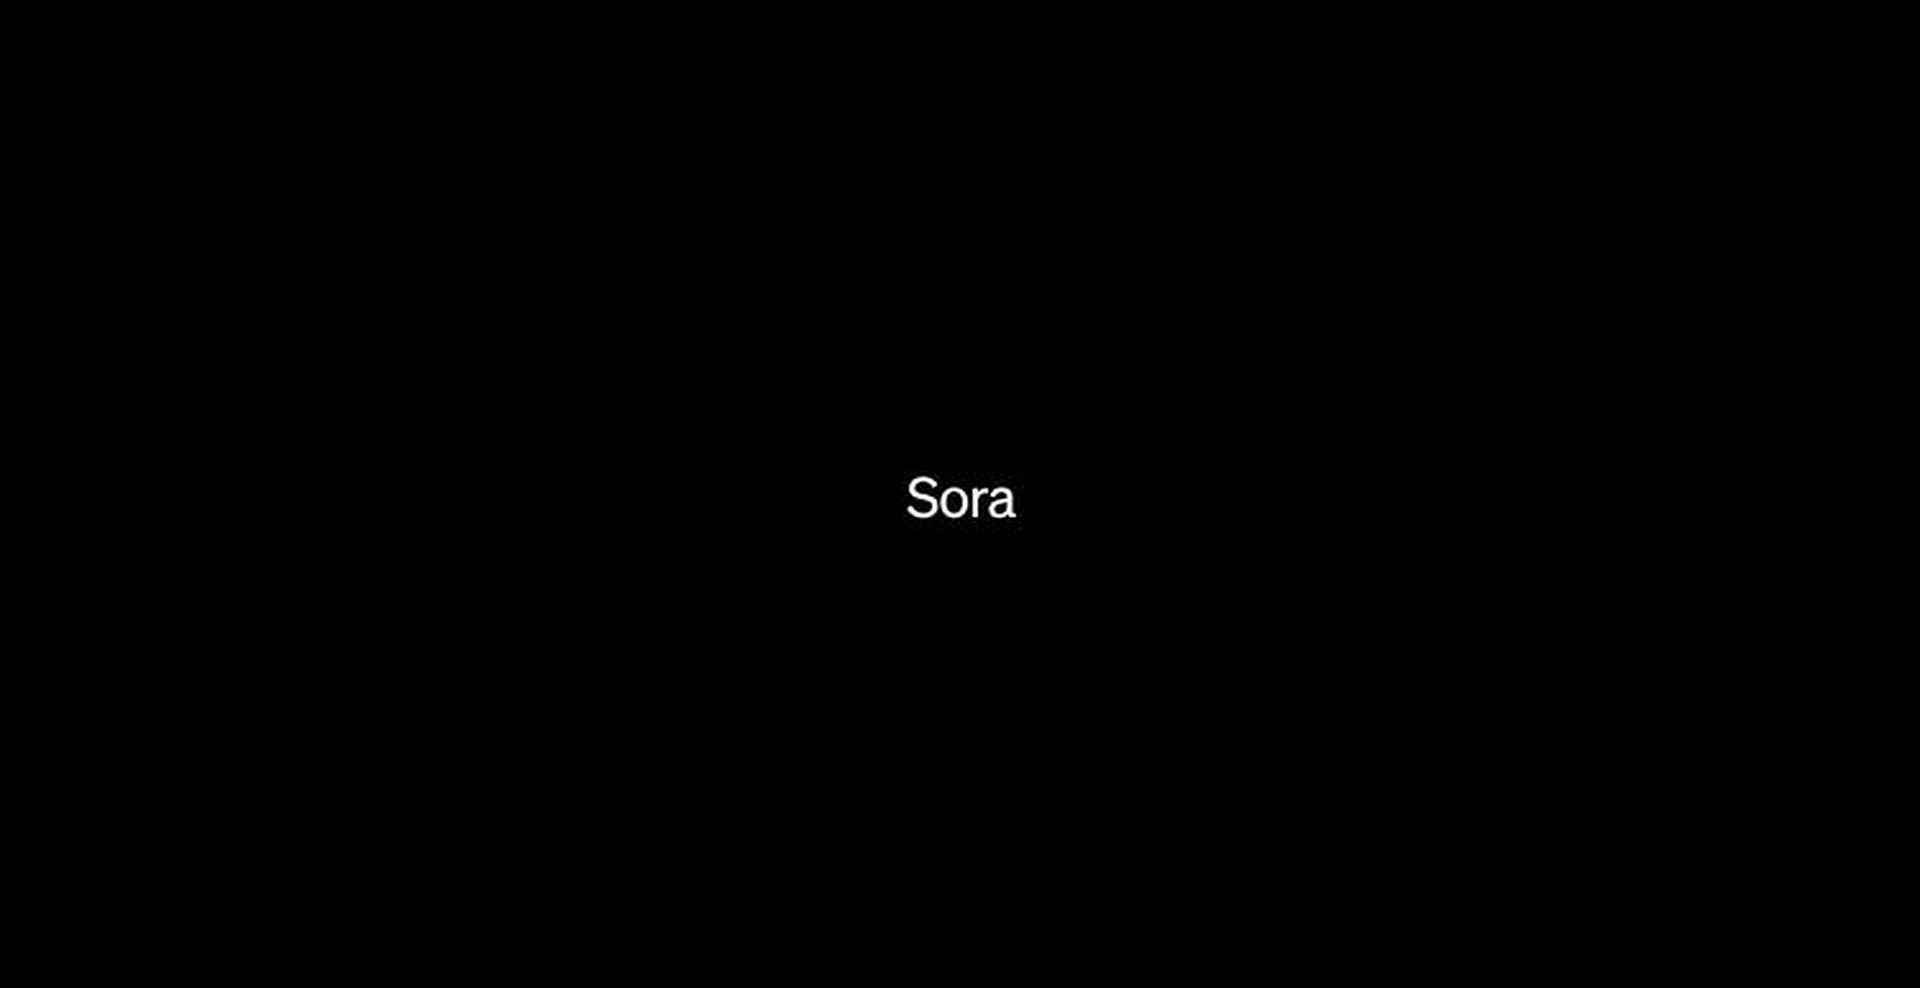 Explained: Is Sora free?